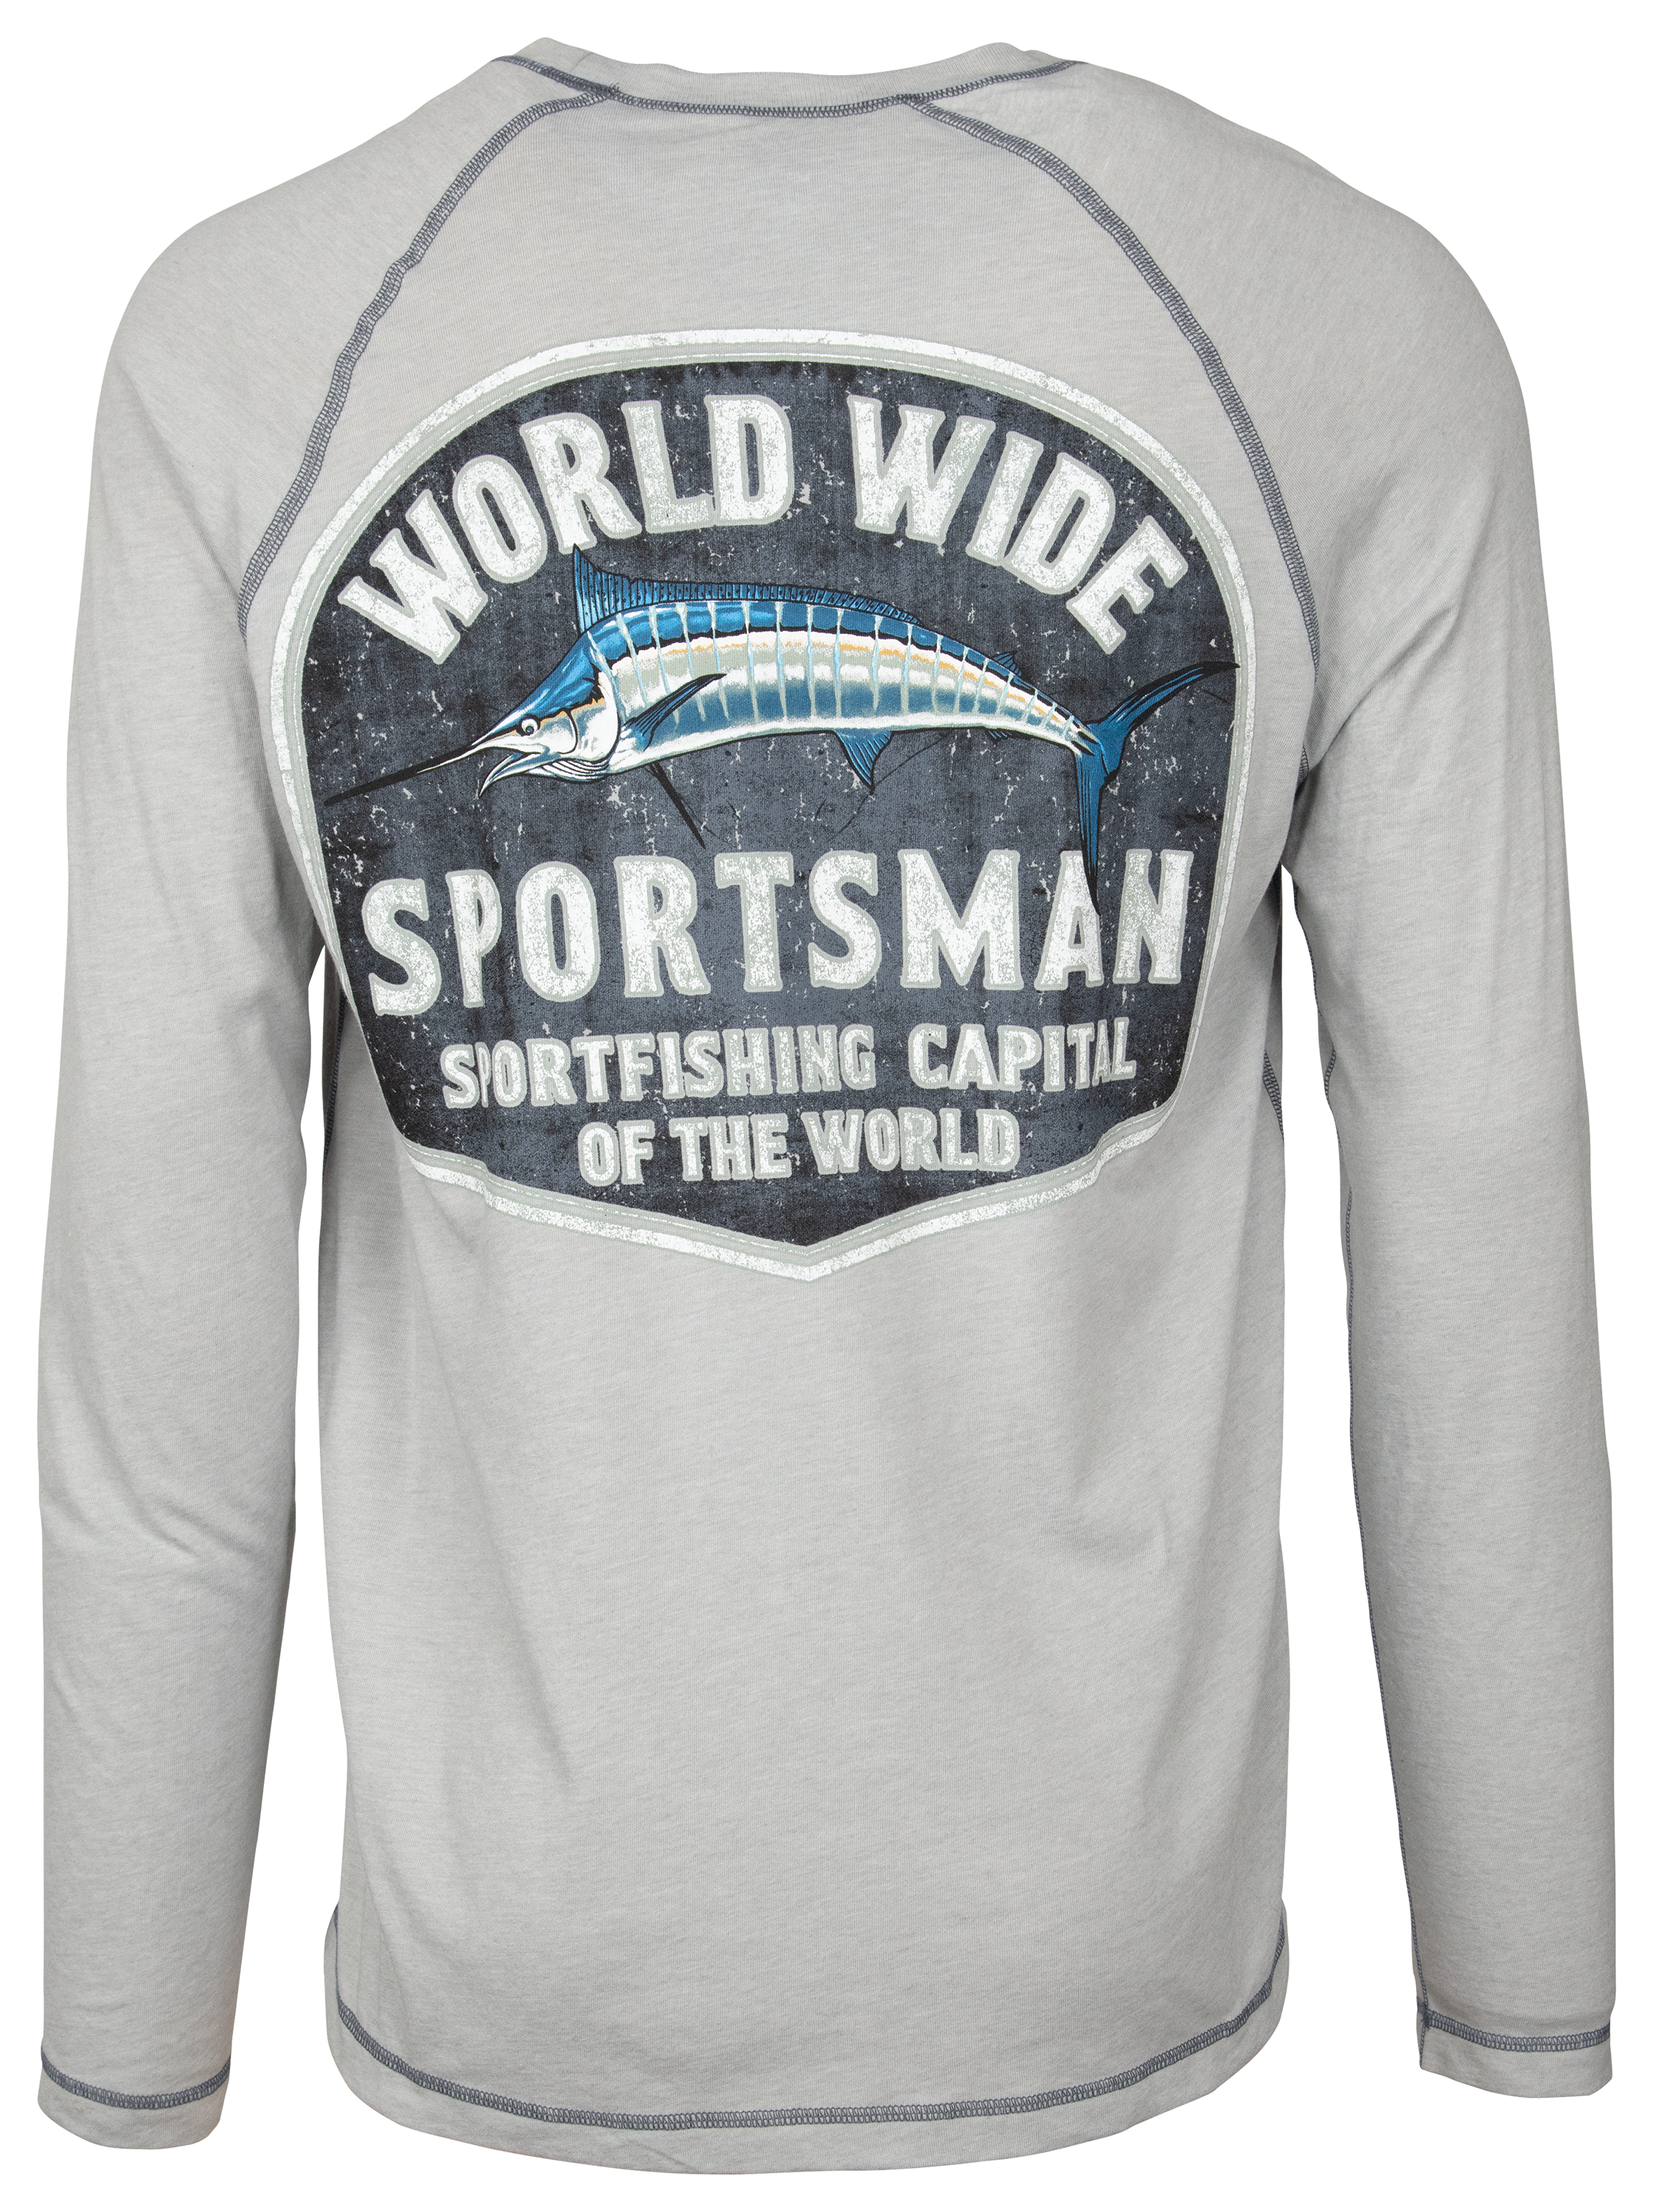 World Wide Sportsman Vintage Sportfishing Capital Long-Sleeve Crew